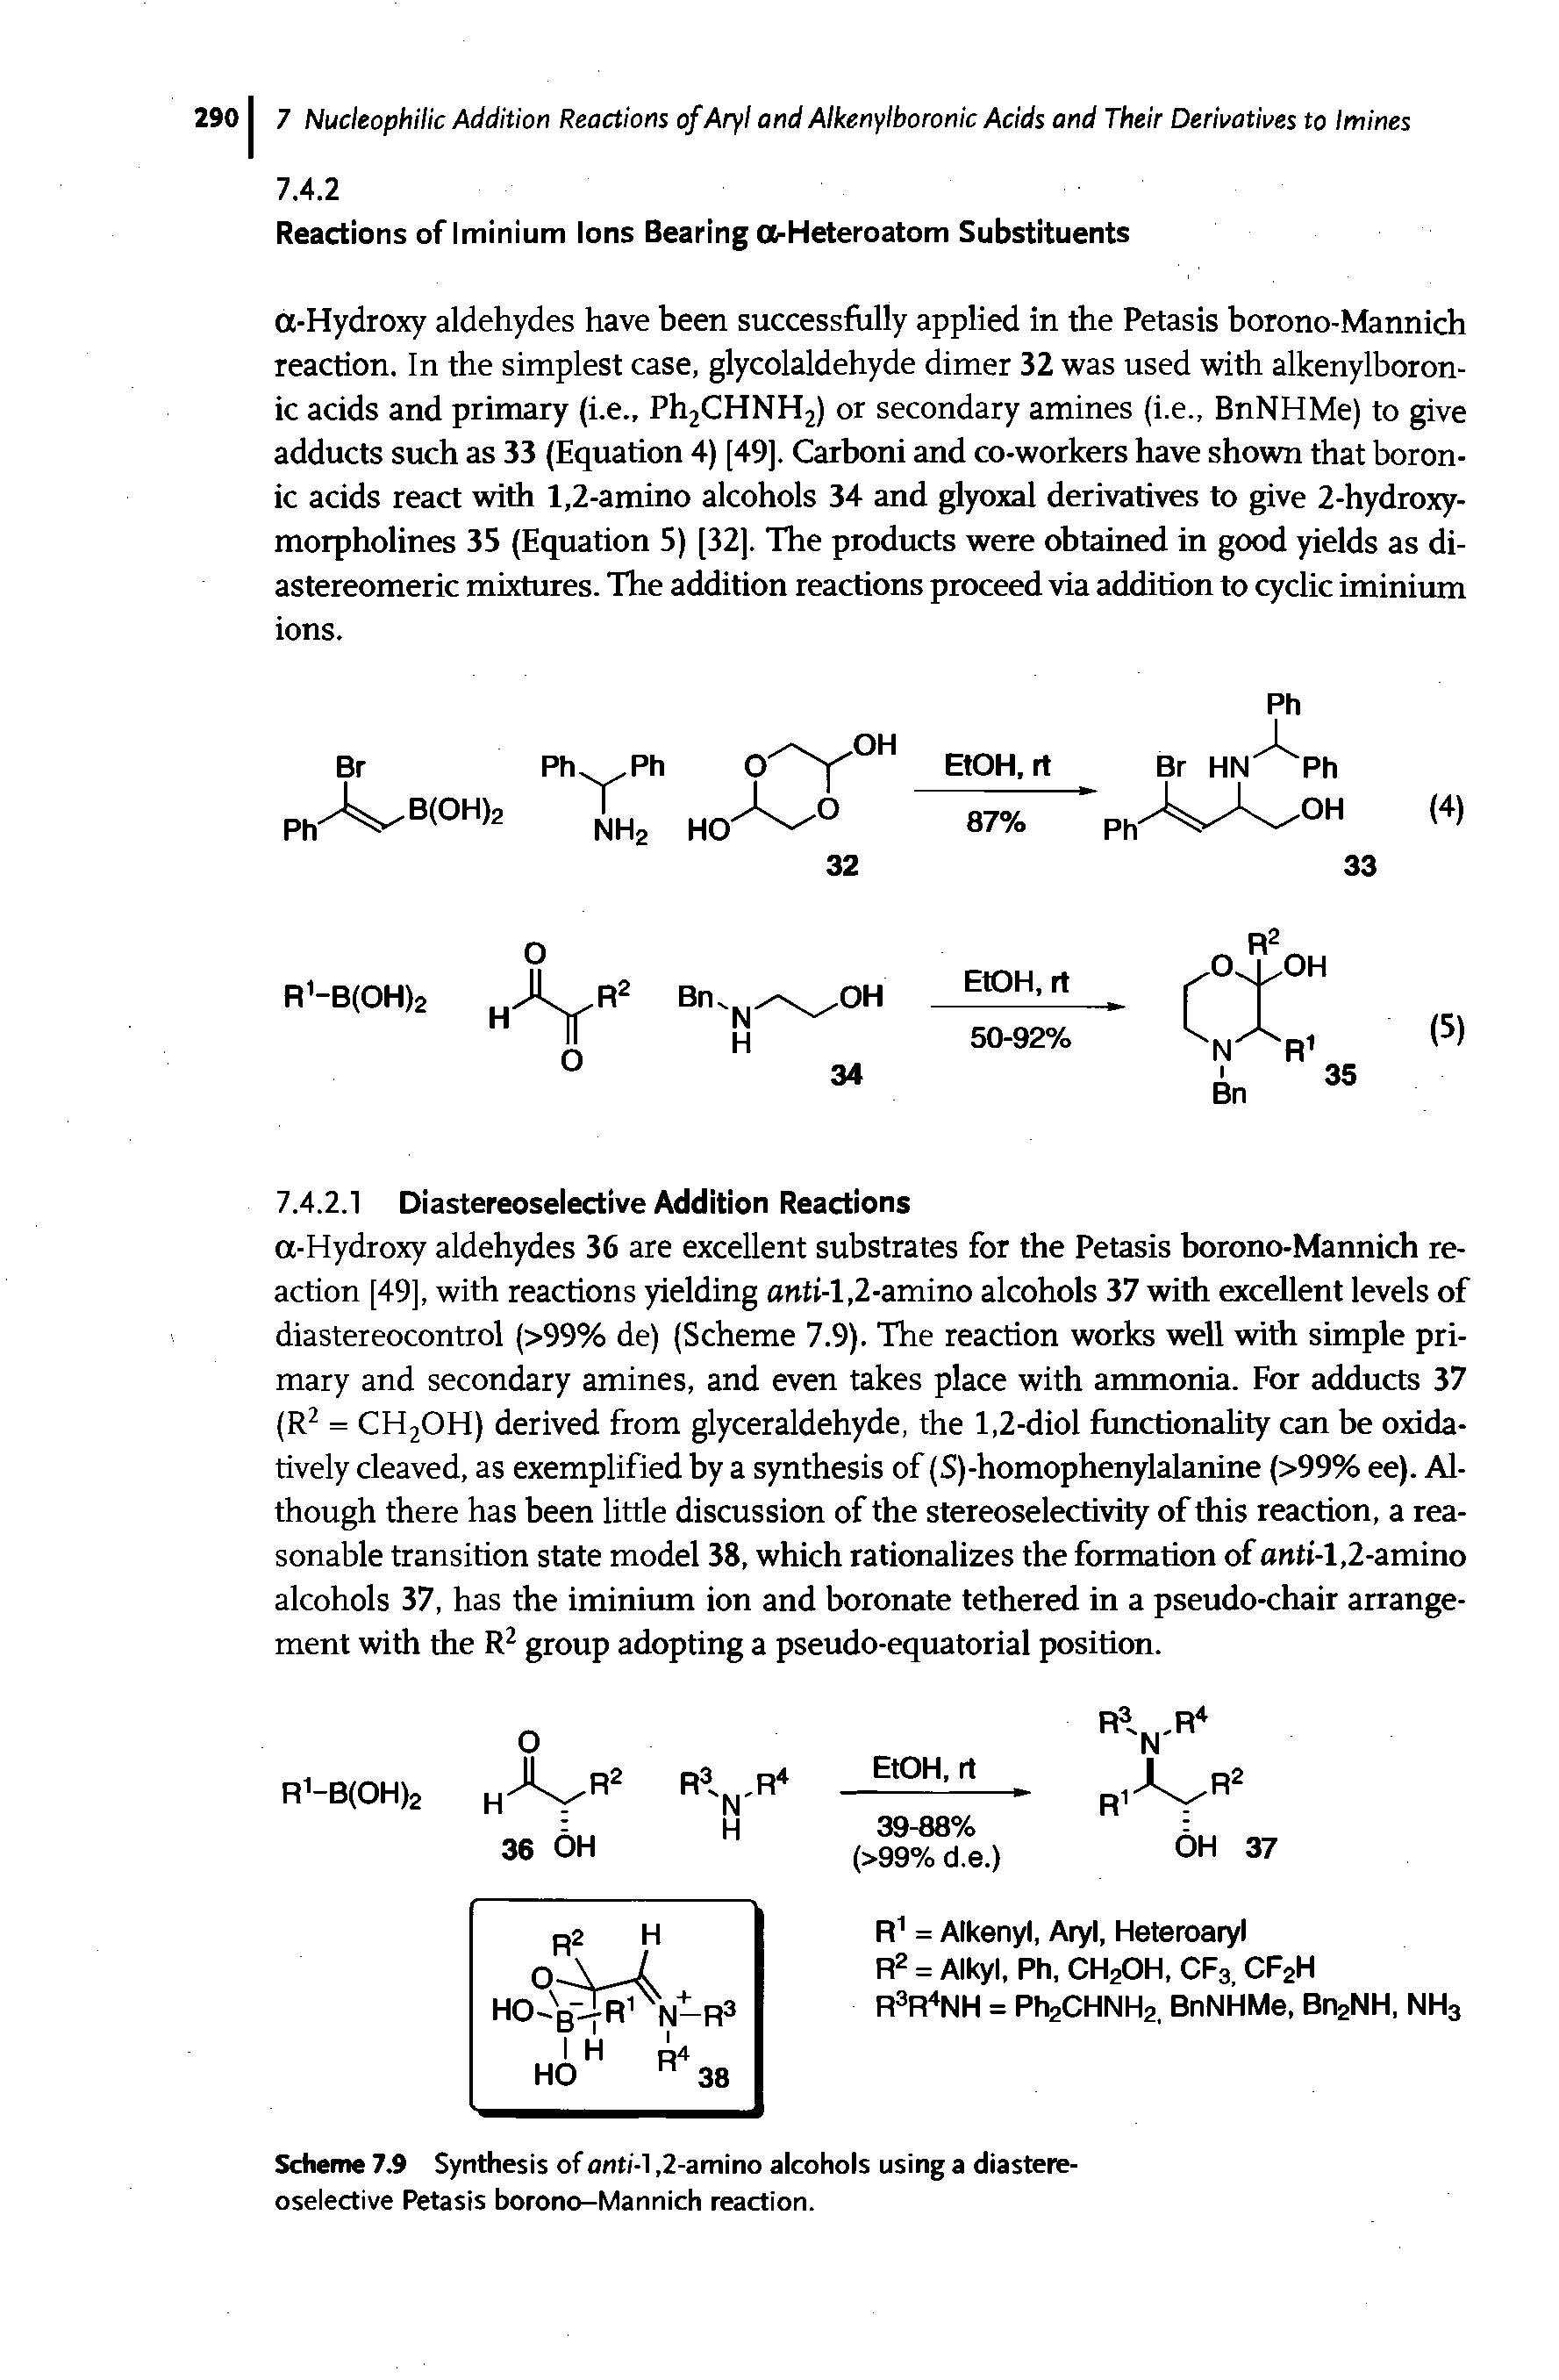 Scheme 7.9 Synthesis of ont/-1,2-amino alcohols using a diastere-oselective Petasis borono-Mannich reaction.